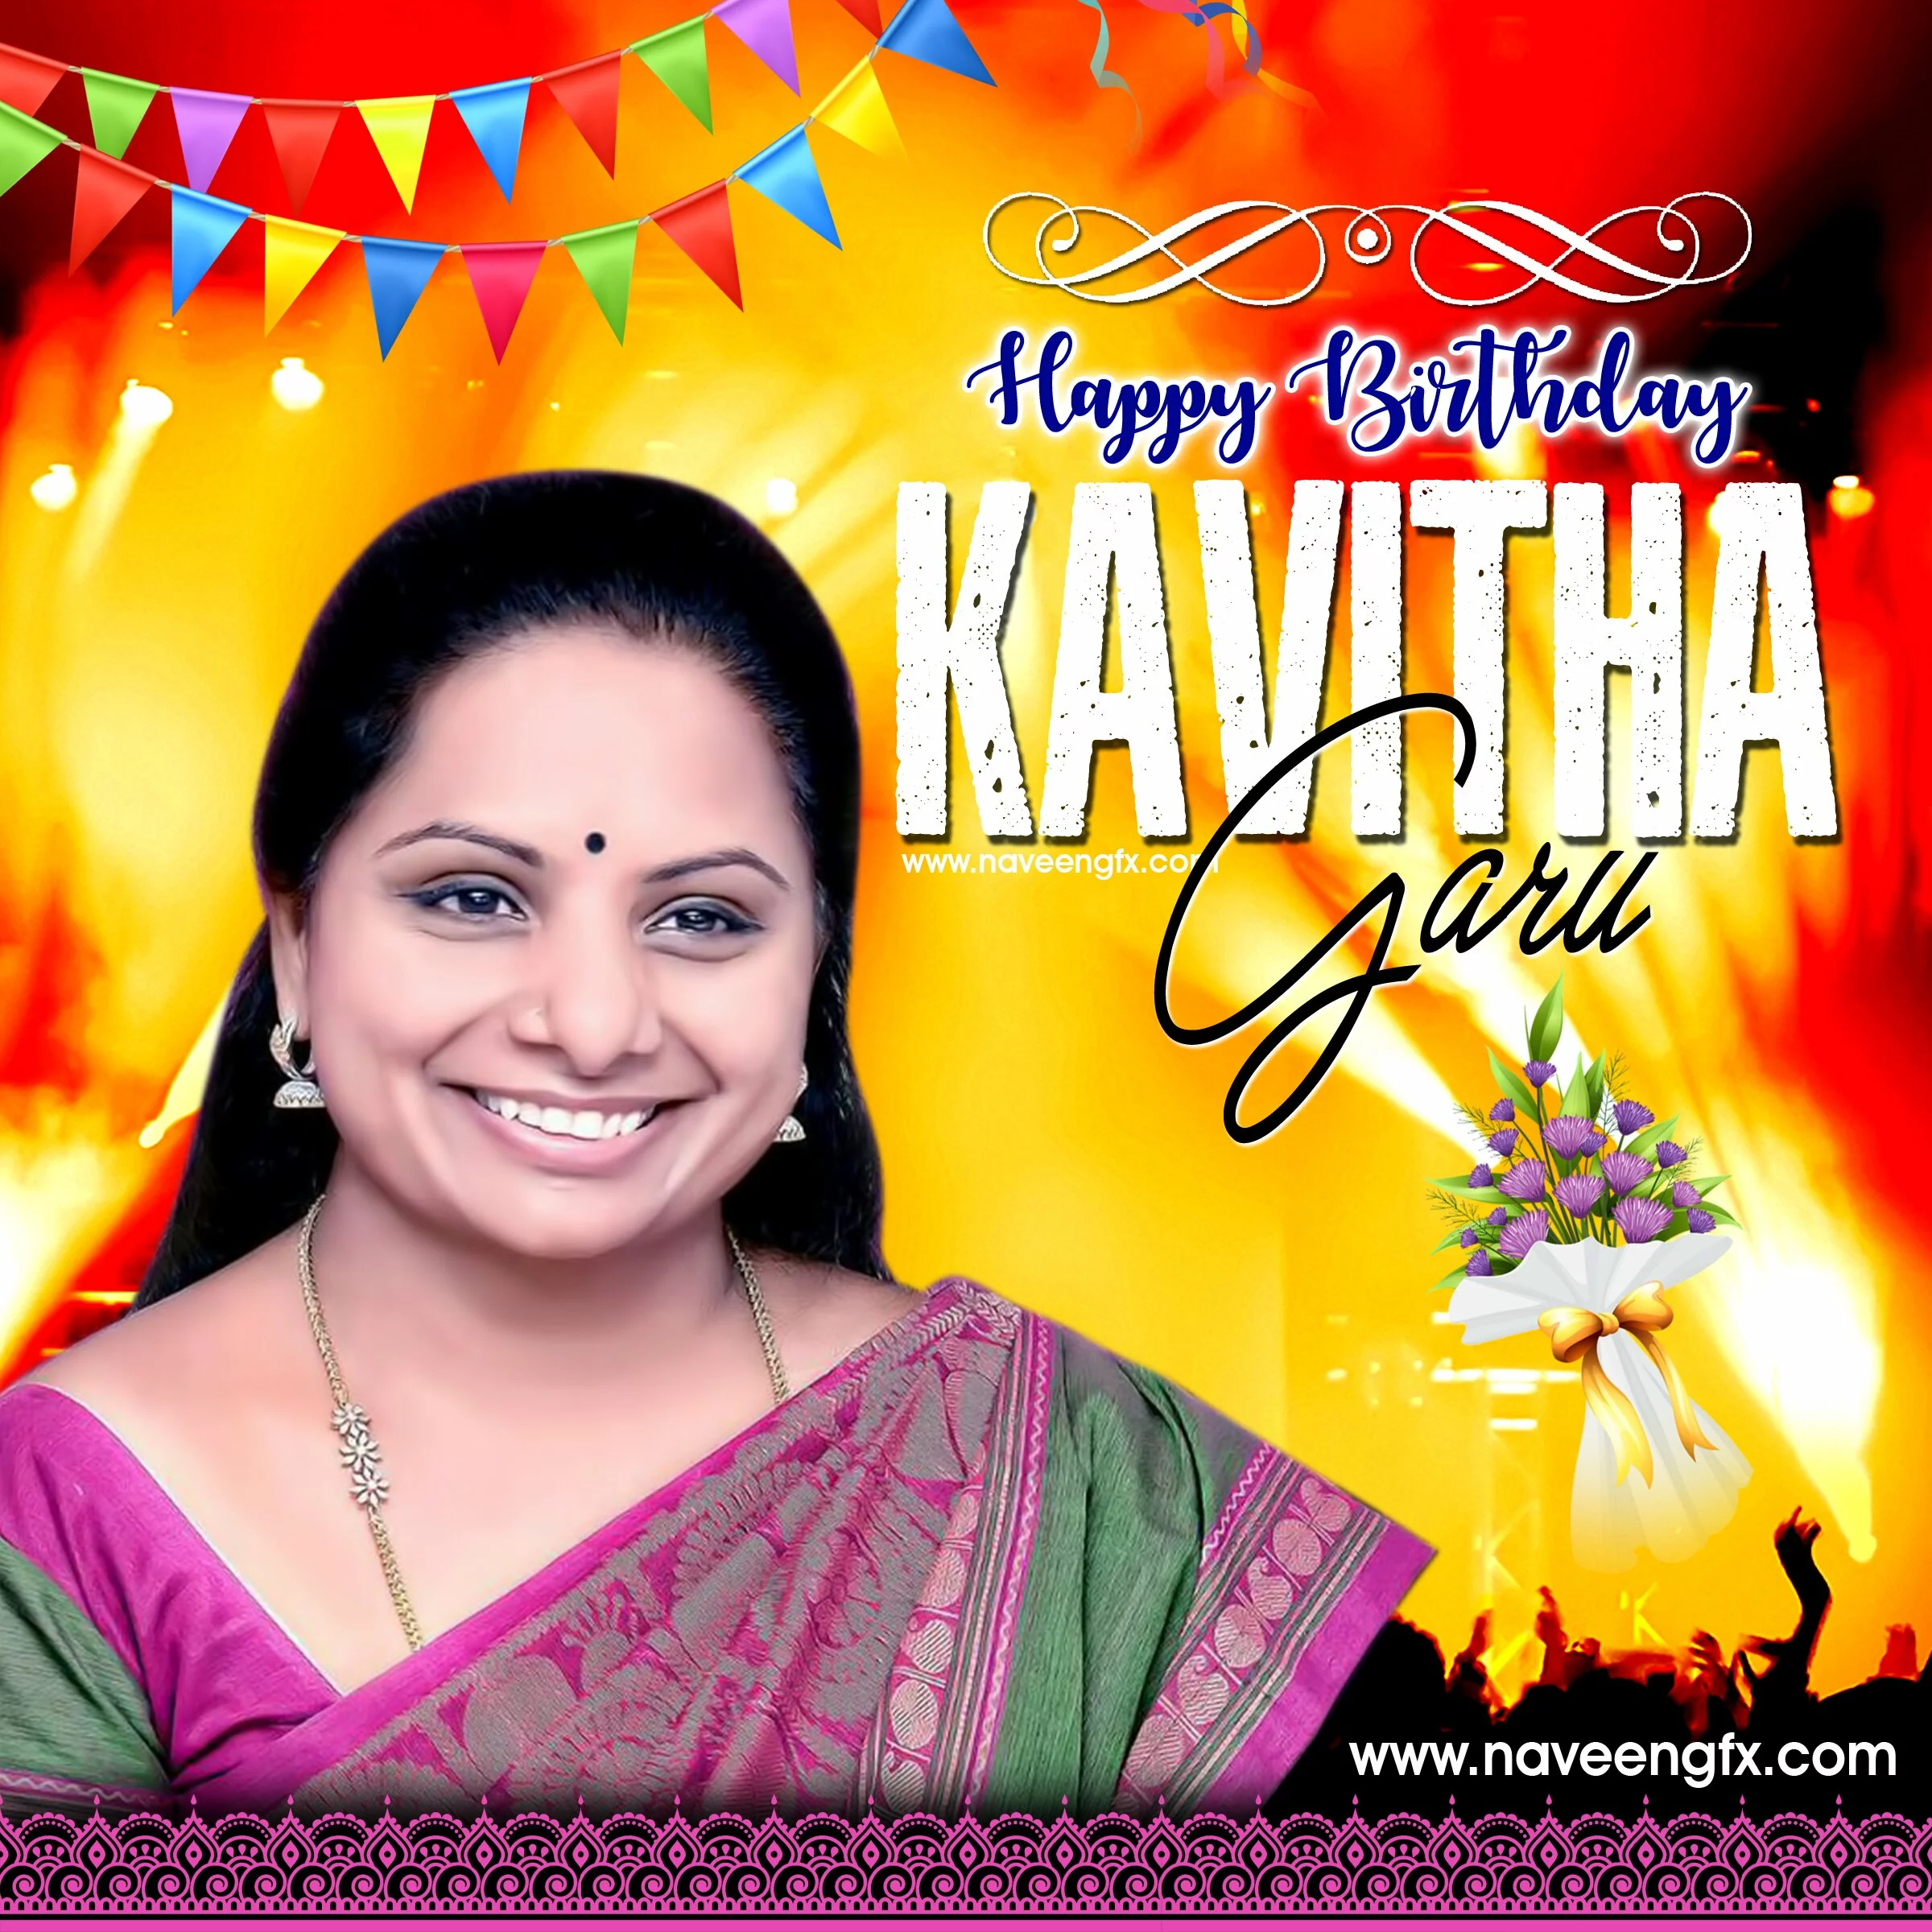 nizamabad MP kalvakuntla kavitha birthday wishes Pictures, Images & Photos